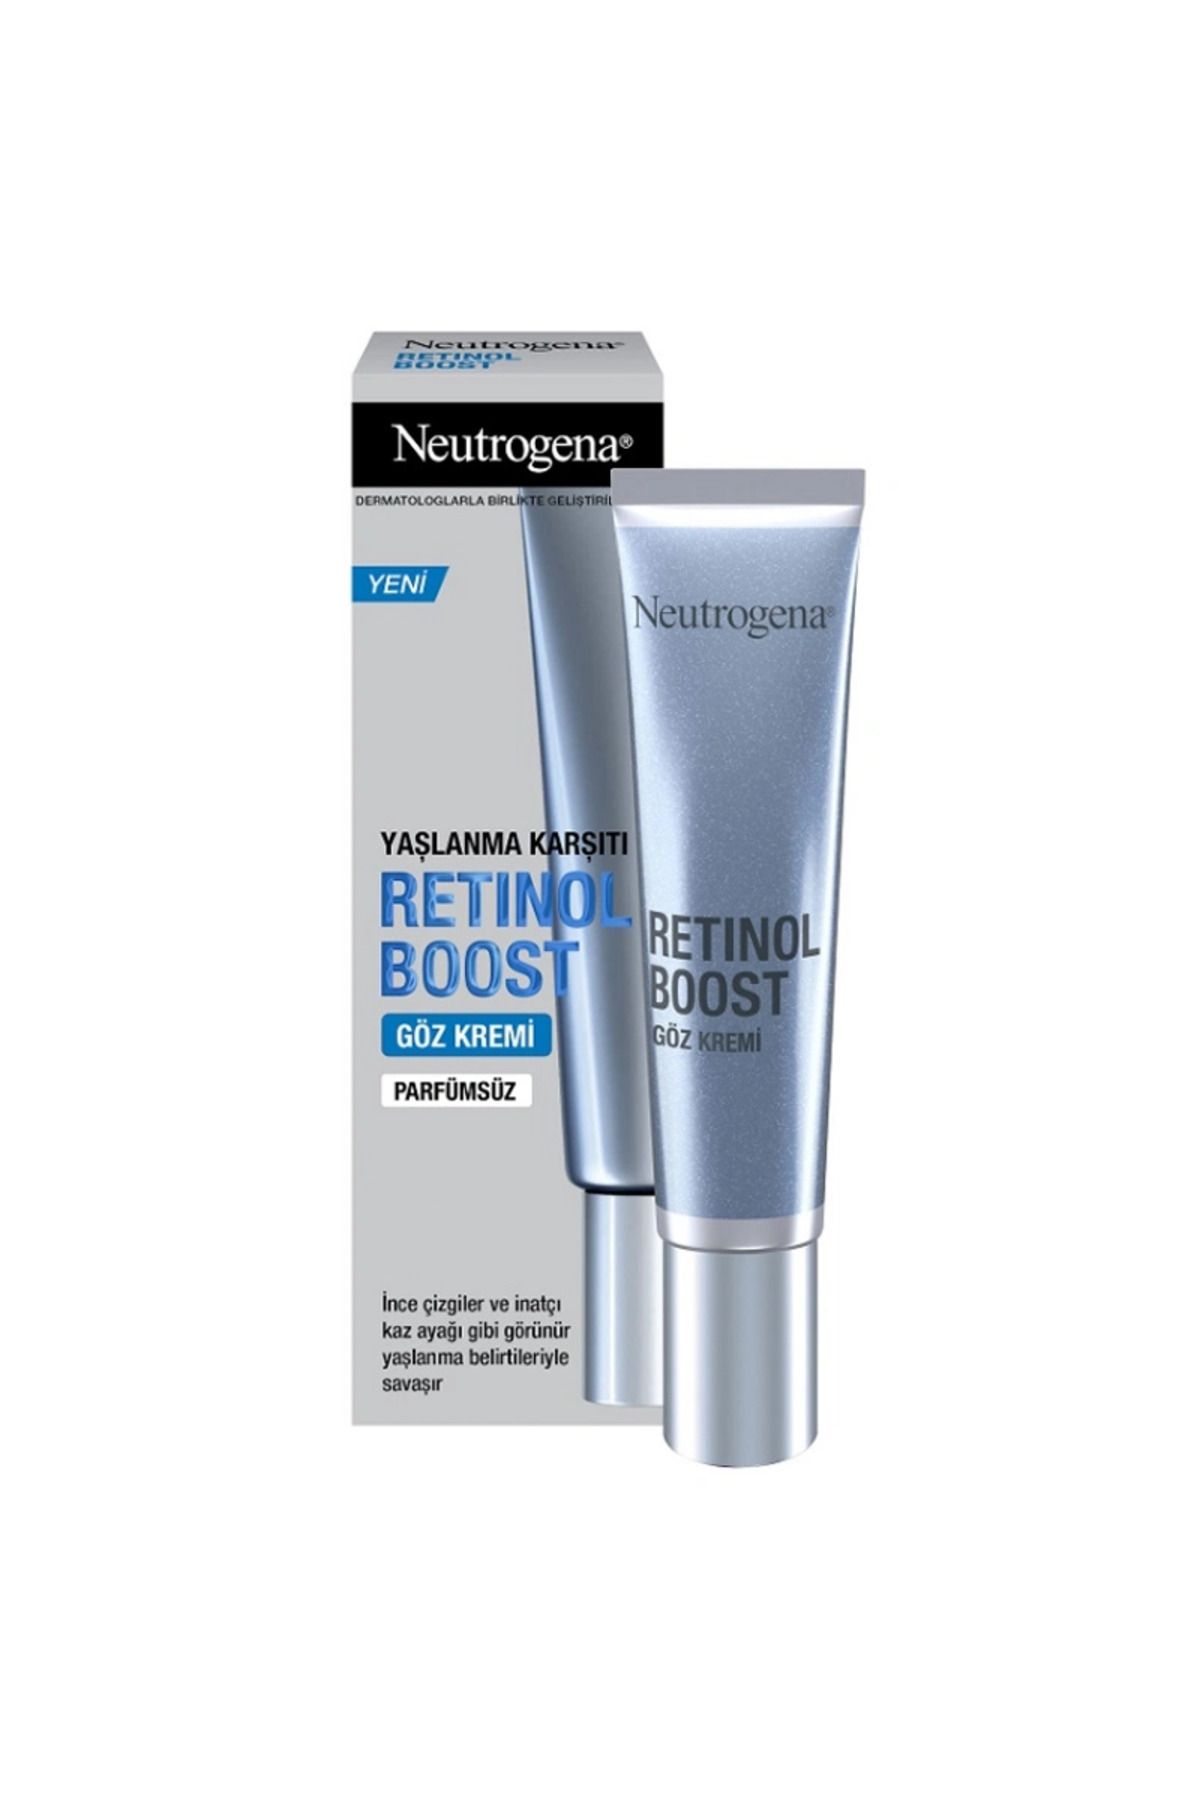 Neutrogena Retinol Boost Yaşlanma Karşıtı Göz Çevresi Kremi 15 ml